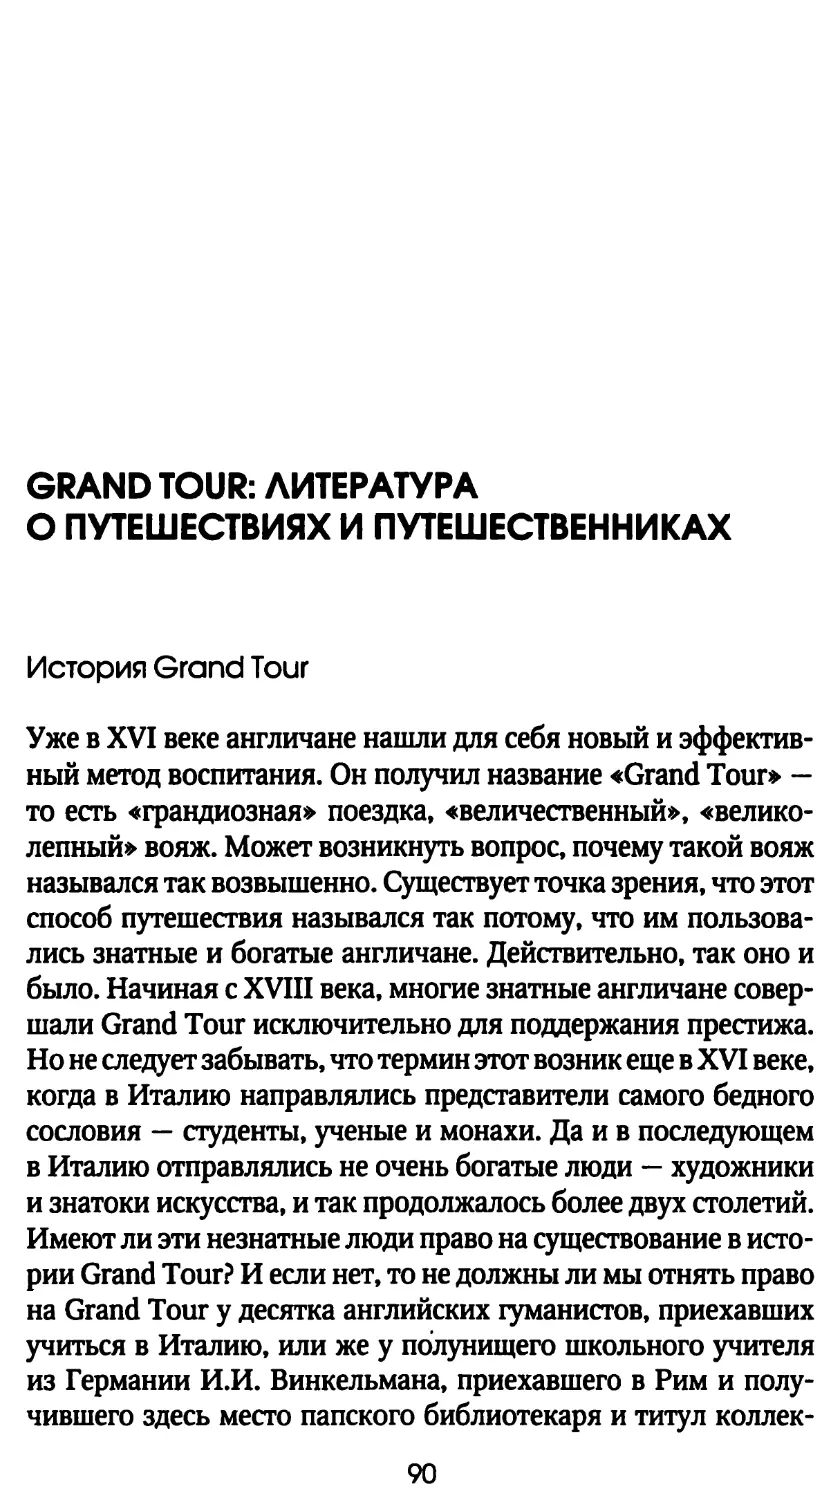 Grand Tour: литература о путешествиях и путешественниках